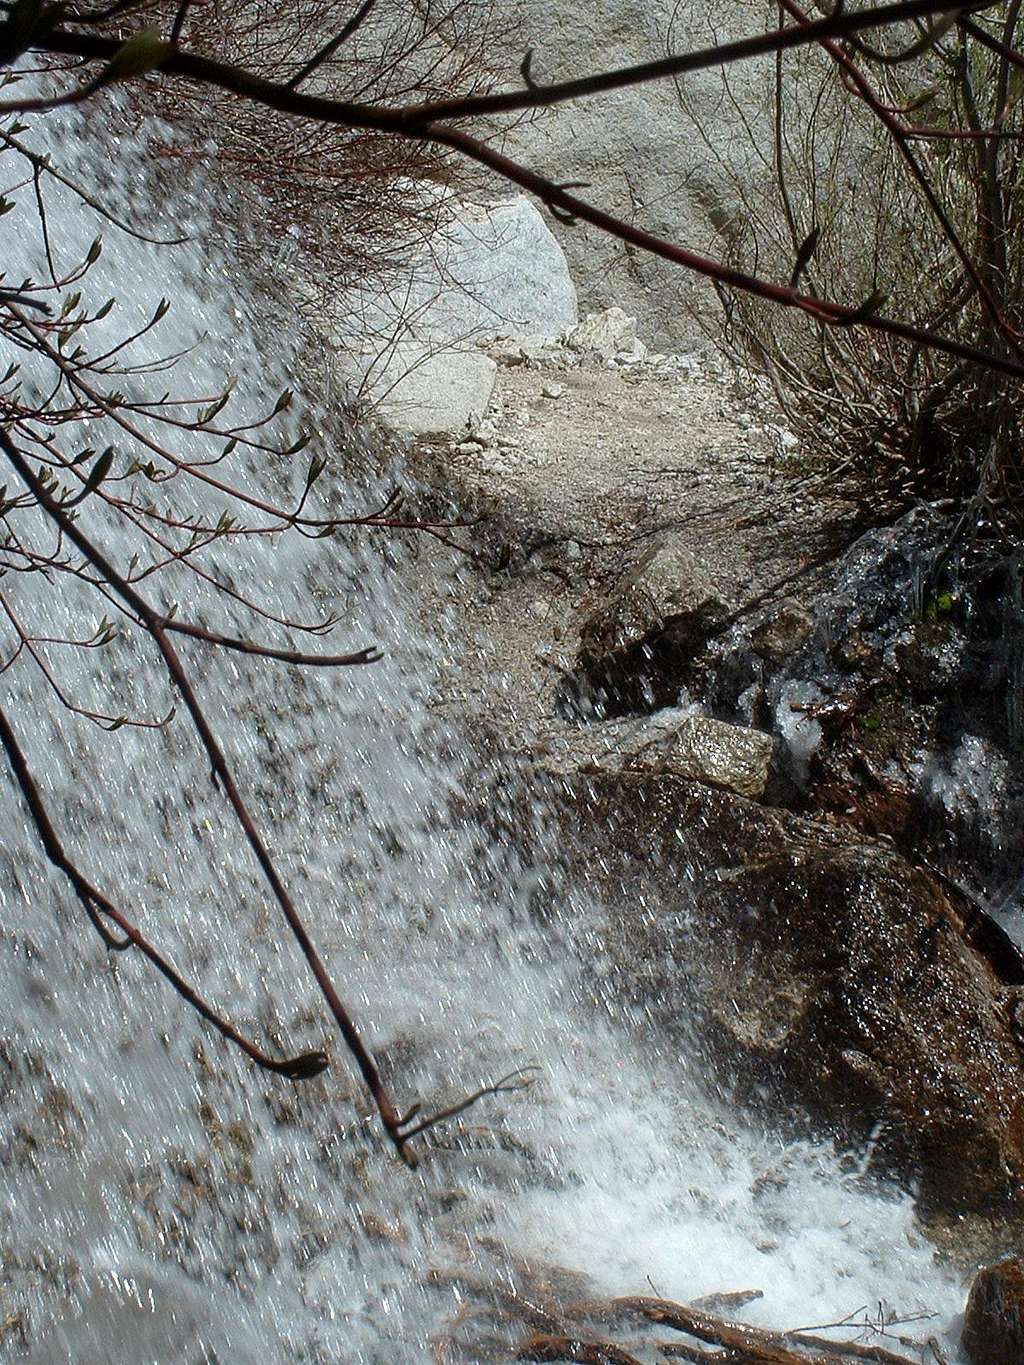 Waterfall, up close